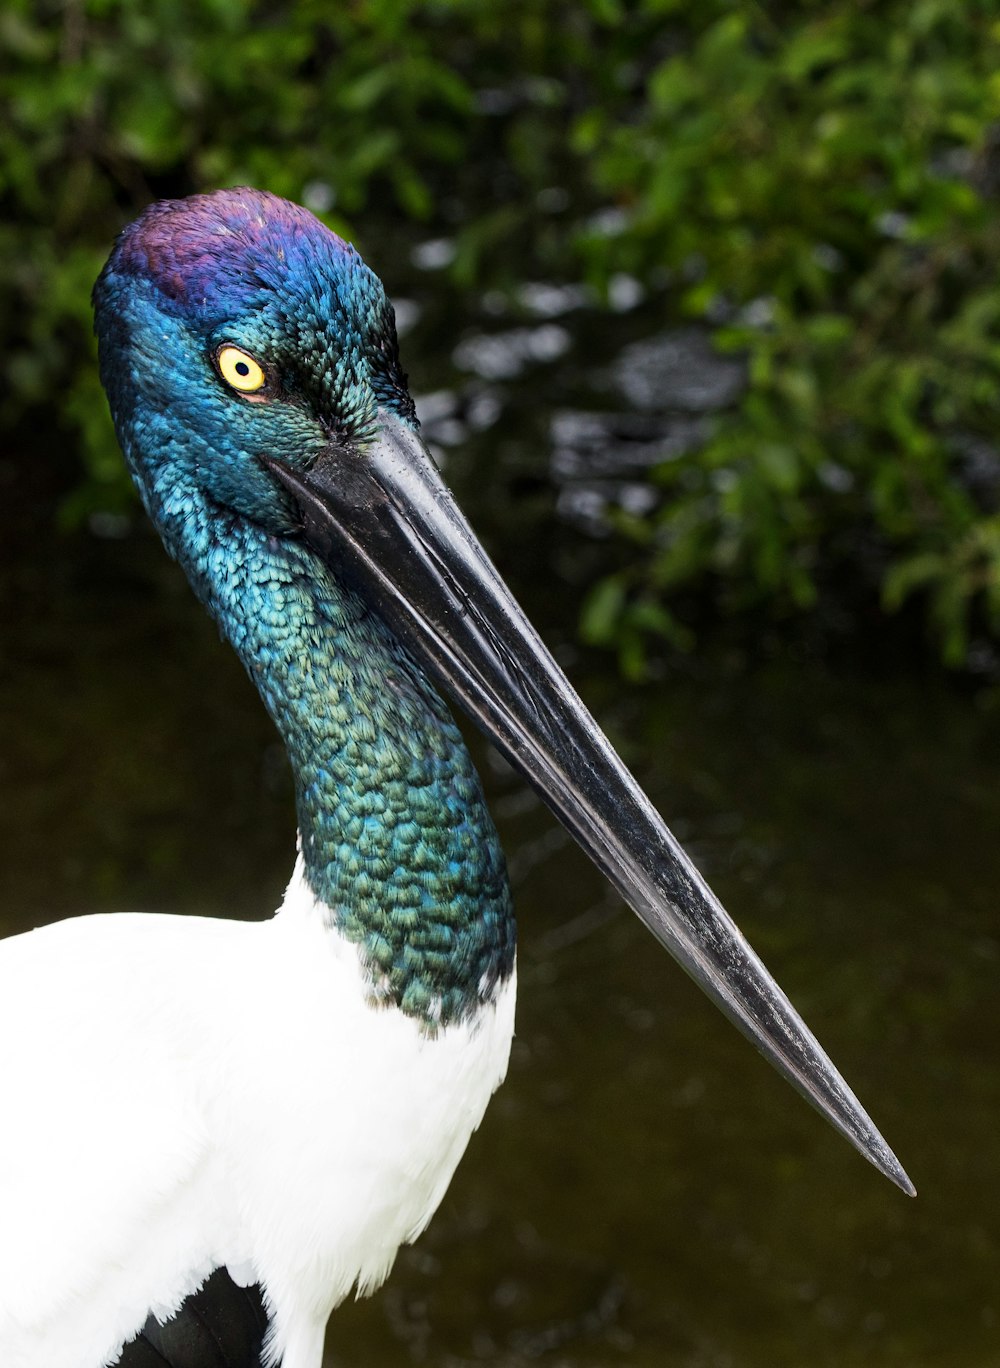 green and white long-beaked bird